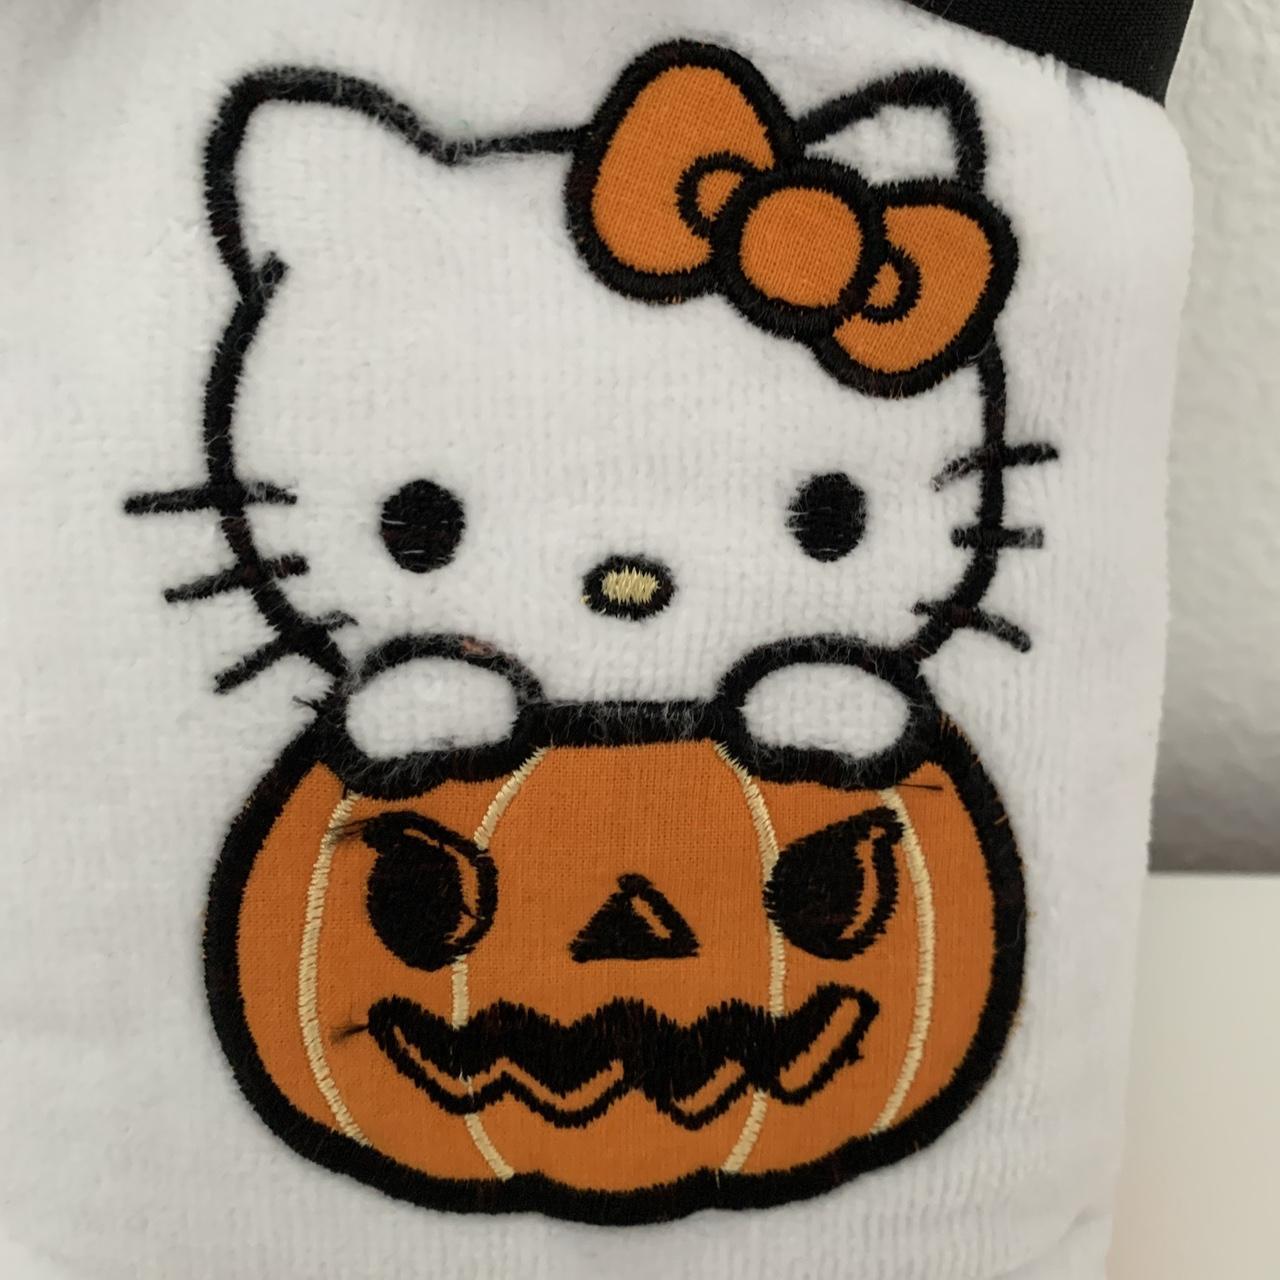 Hello Kitty Halloween Embroidery Designs (2 sizes!)